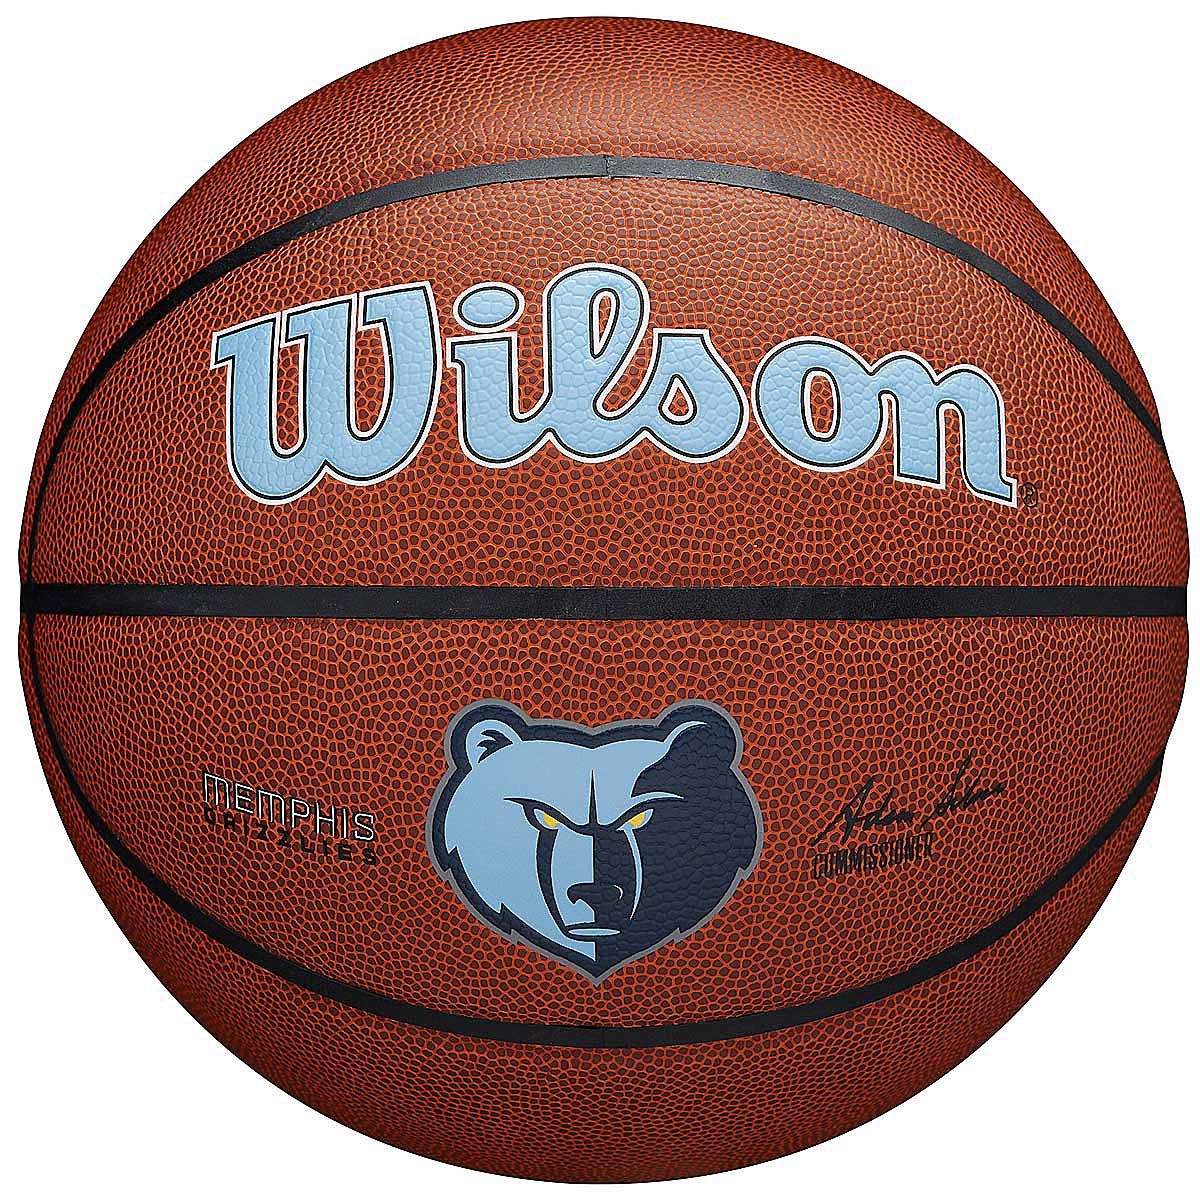 Image of Wilson NBA Memphis Grizzlies Team Alliance Basketball, Gold